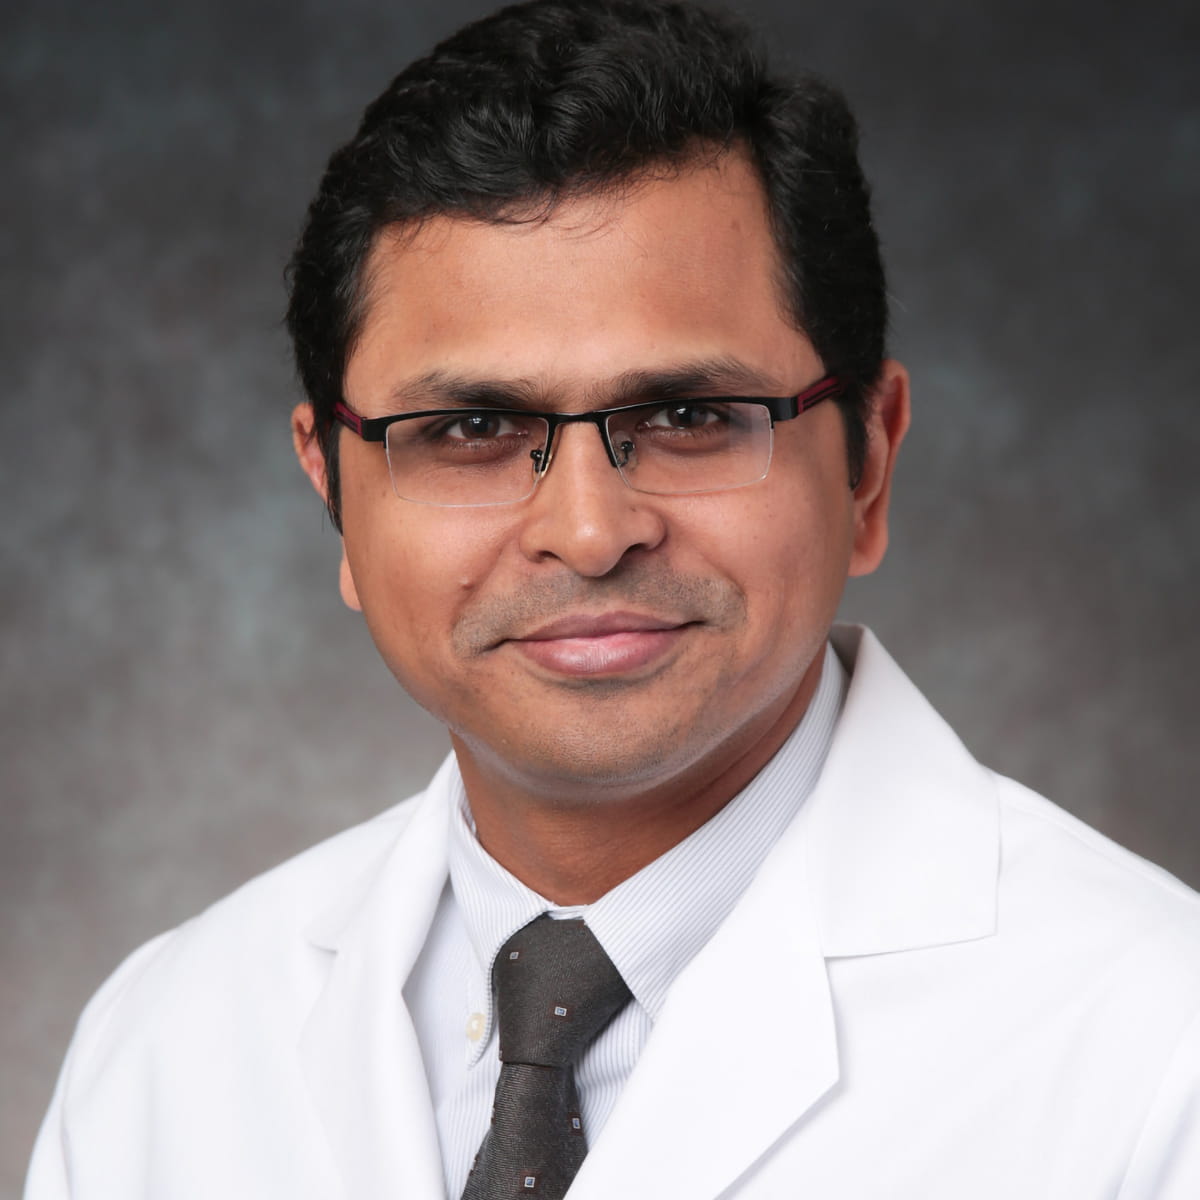 A friendly headshot of Hardikkumar Patel, MD